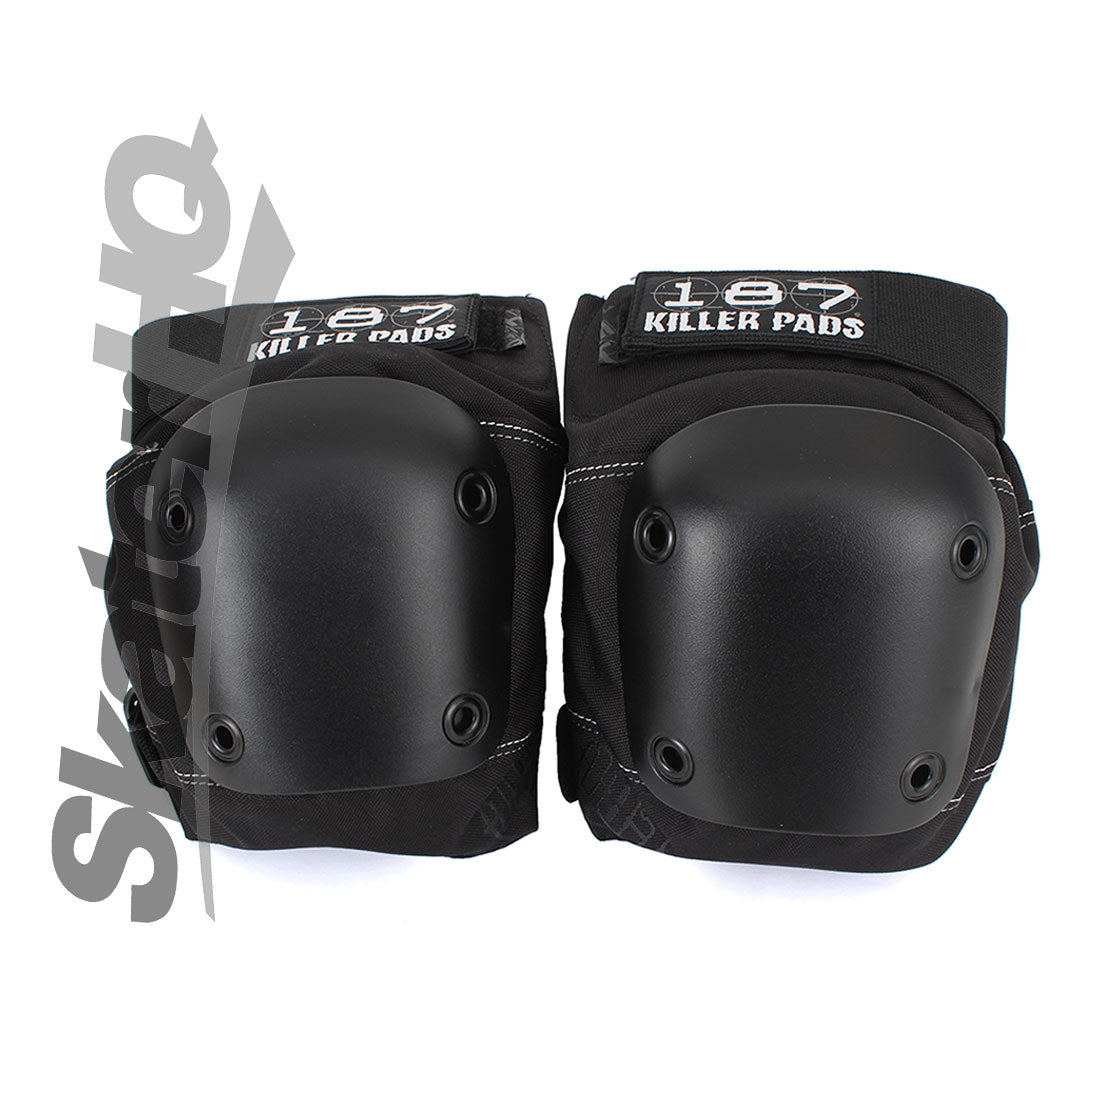 187 Slim Knee Pads - Black Protective Gear